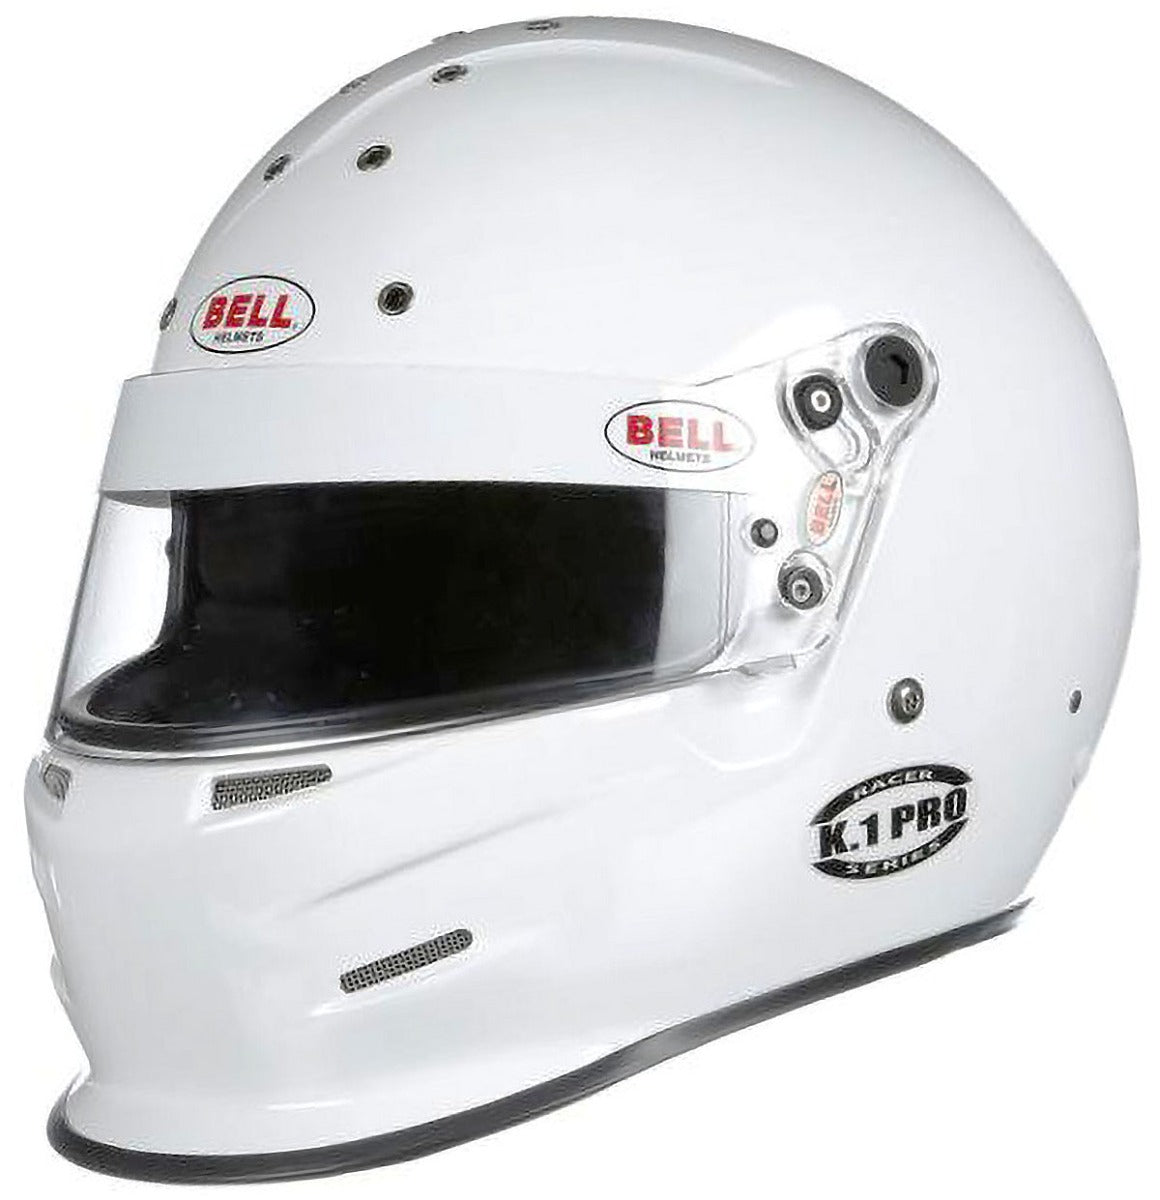 Bell K1 Pro Helmet SA2020 White Front View Image